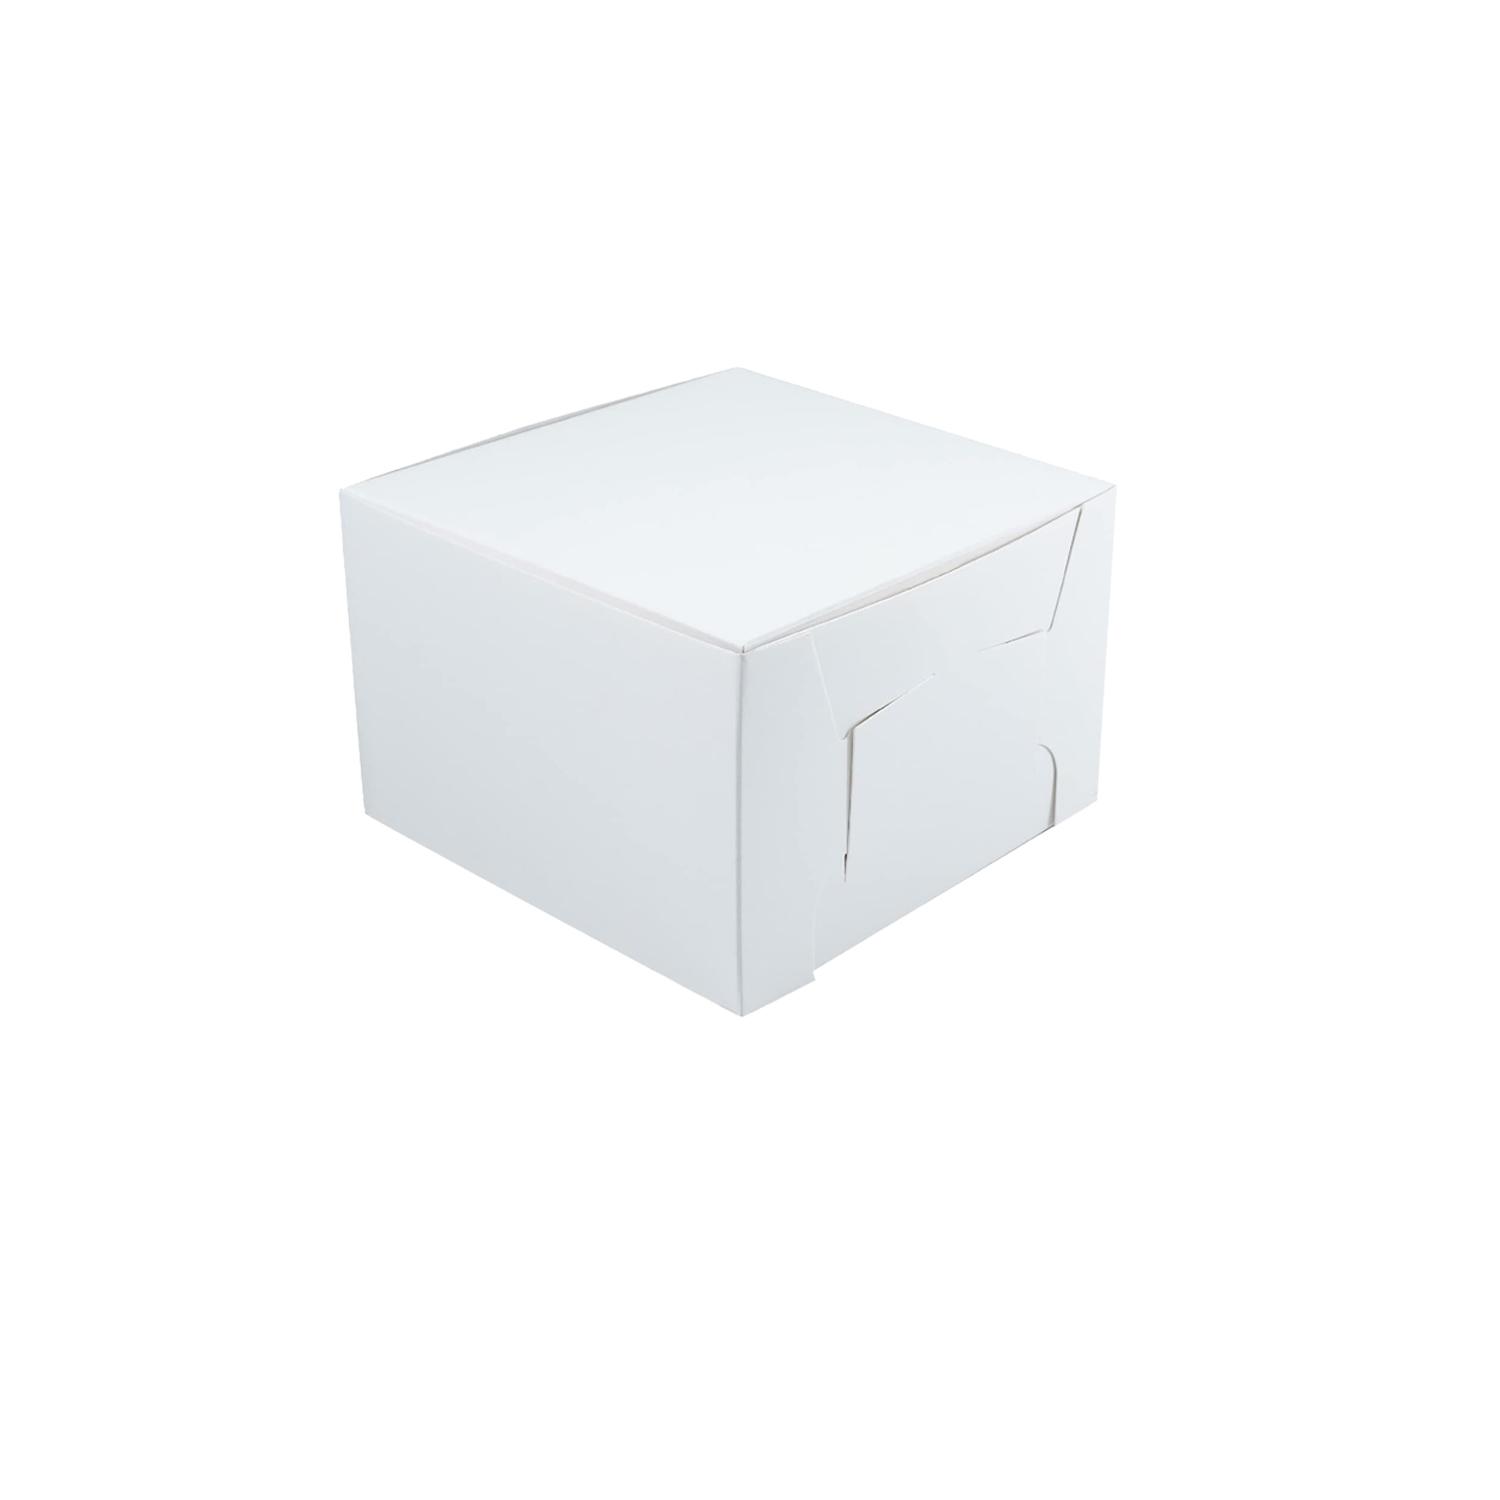 WHITE 6 X 6 X 4 INCH CAKE BOX